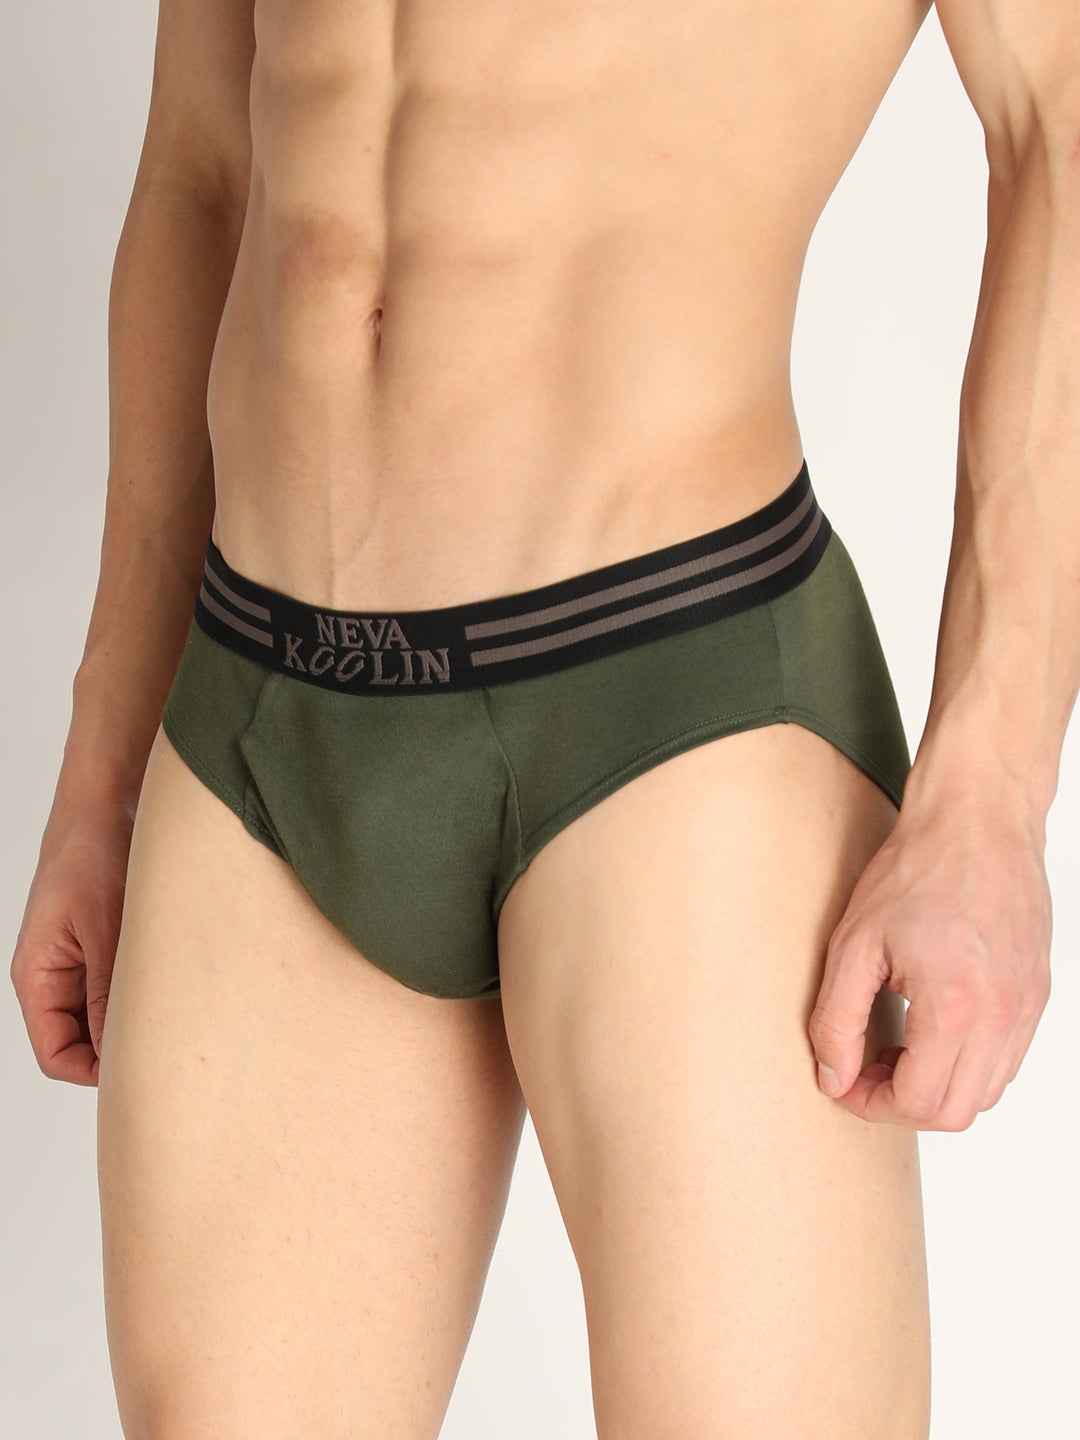 Neva Koolin Men's Solid Underwear Brief in Dark grey, Olive, Air Force, Black Collection (Pack of 4)